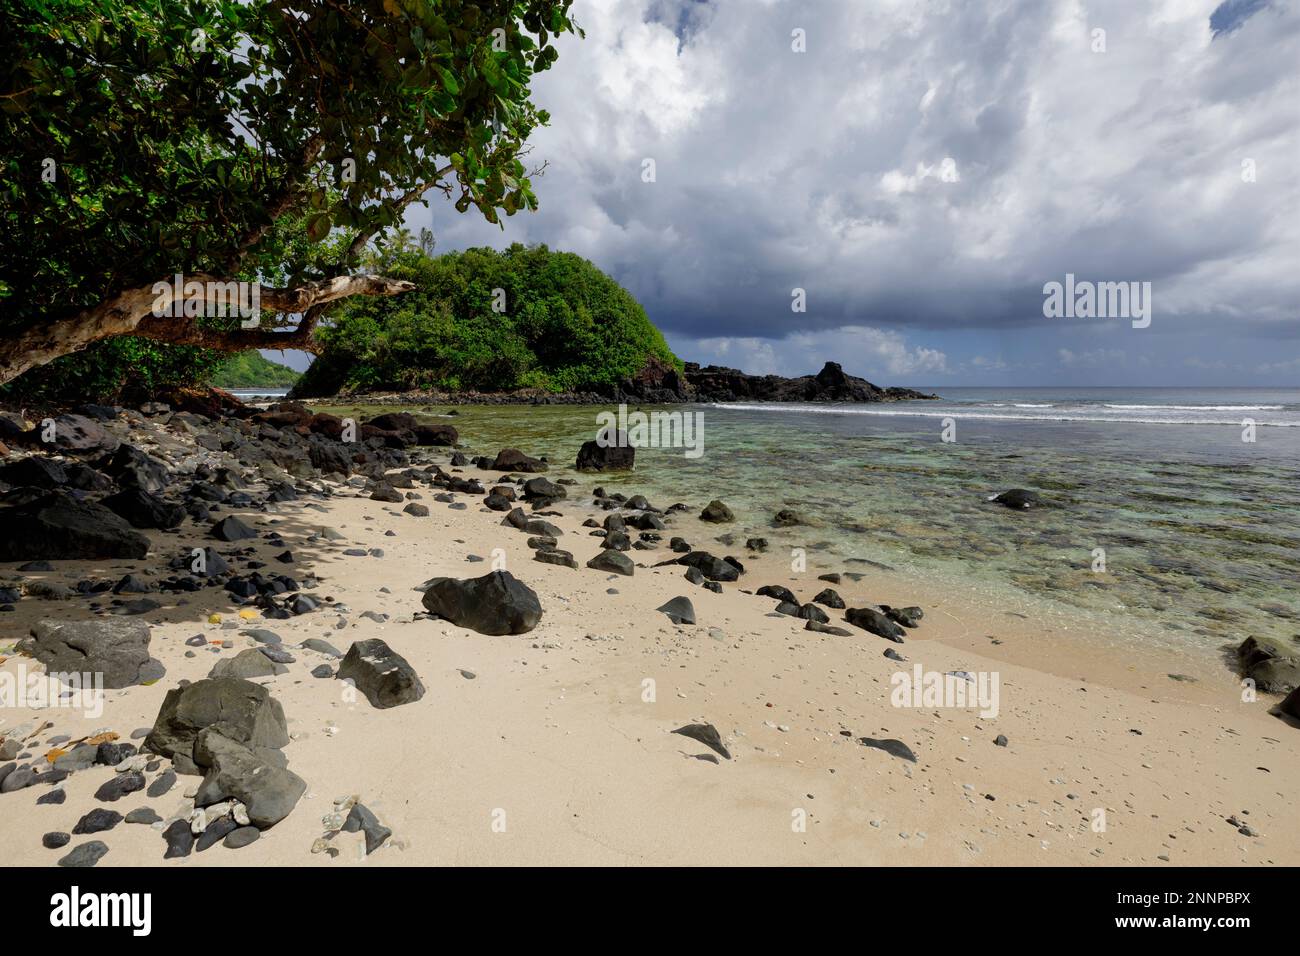 Black rock and white sand beaches along the coast of Amanave village, Tutuila, American Samoa Stock Photo